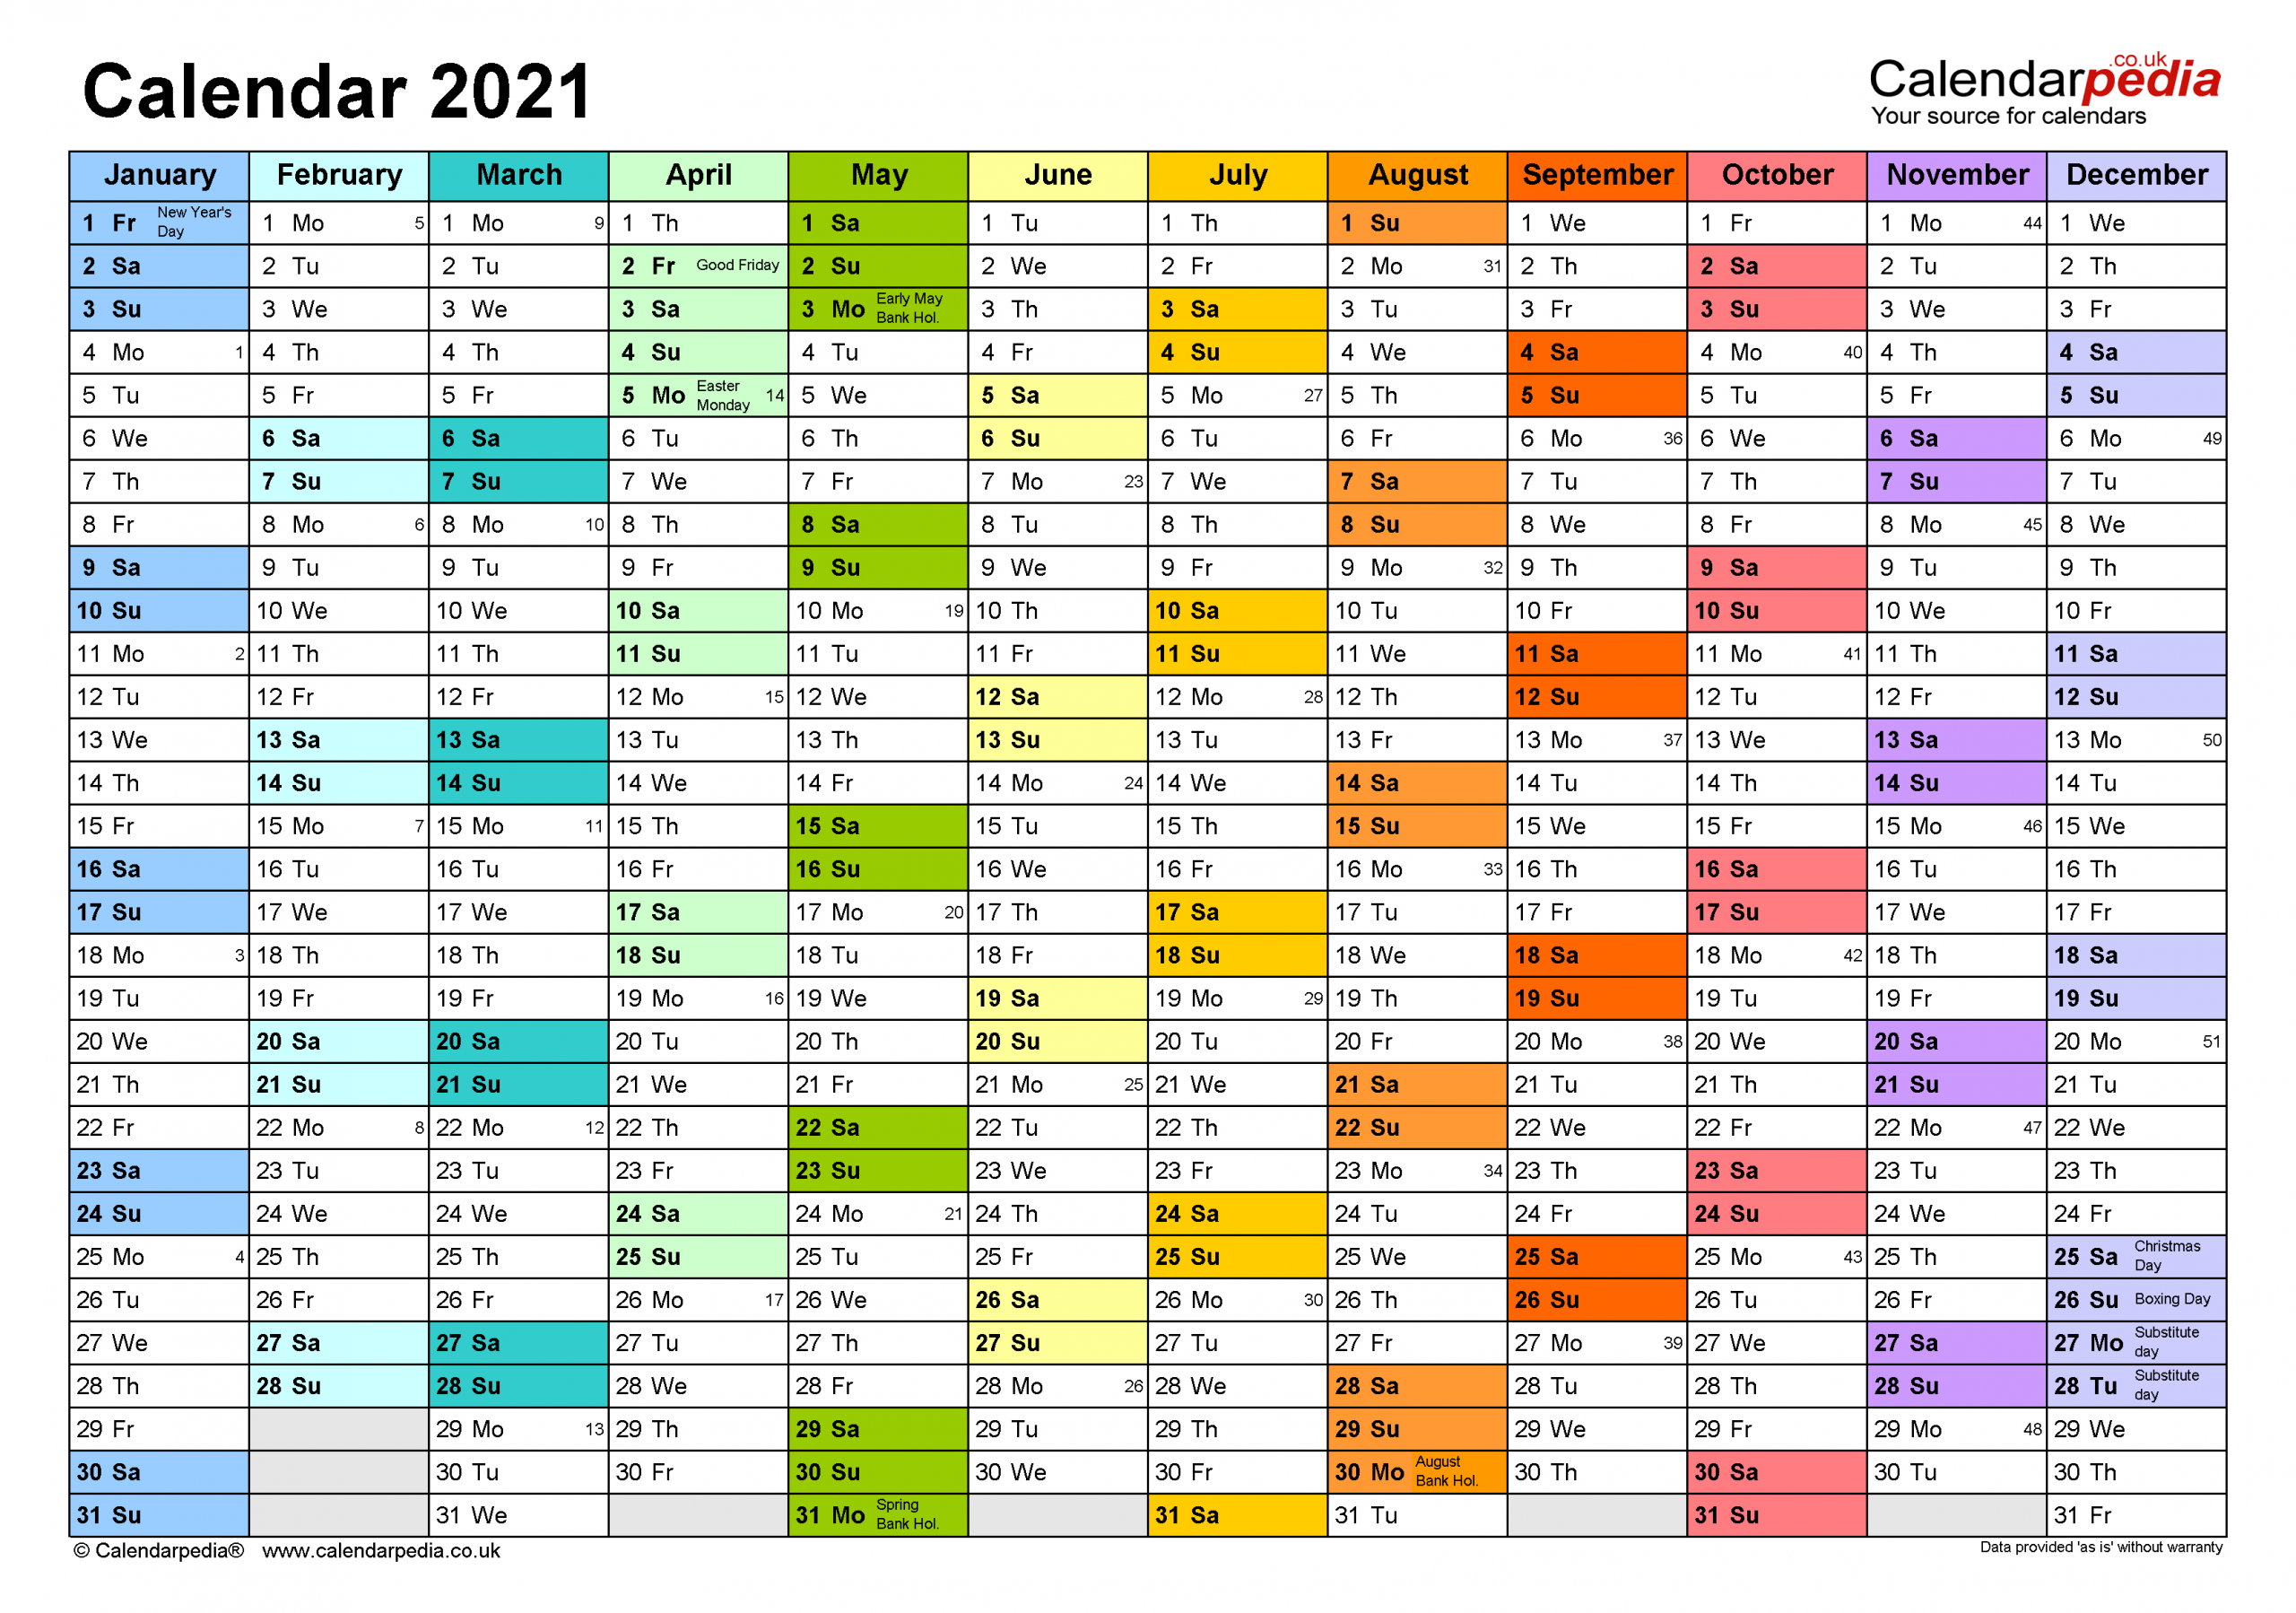 Marketing Calendar 2021 Uk | 2021 Calendar